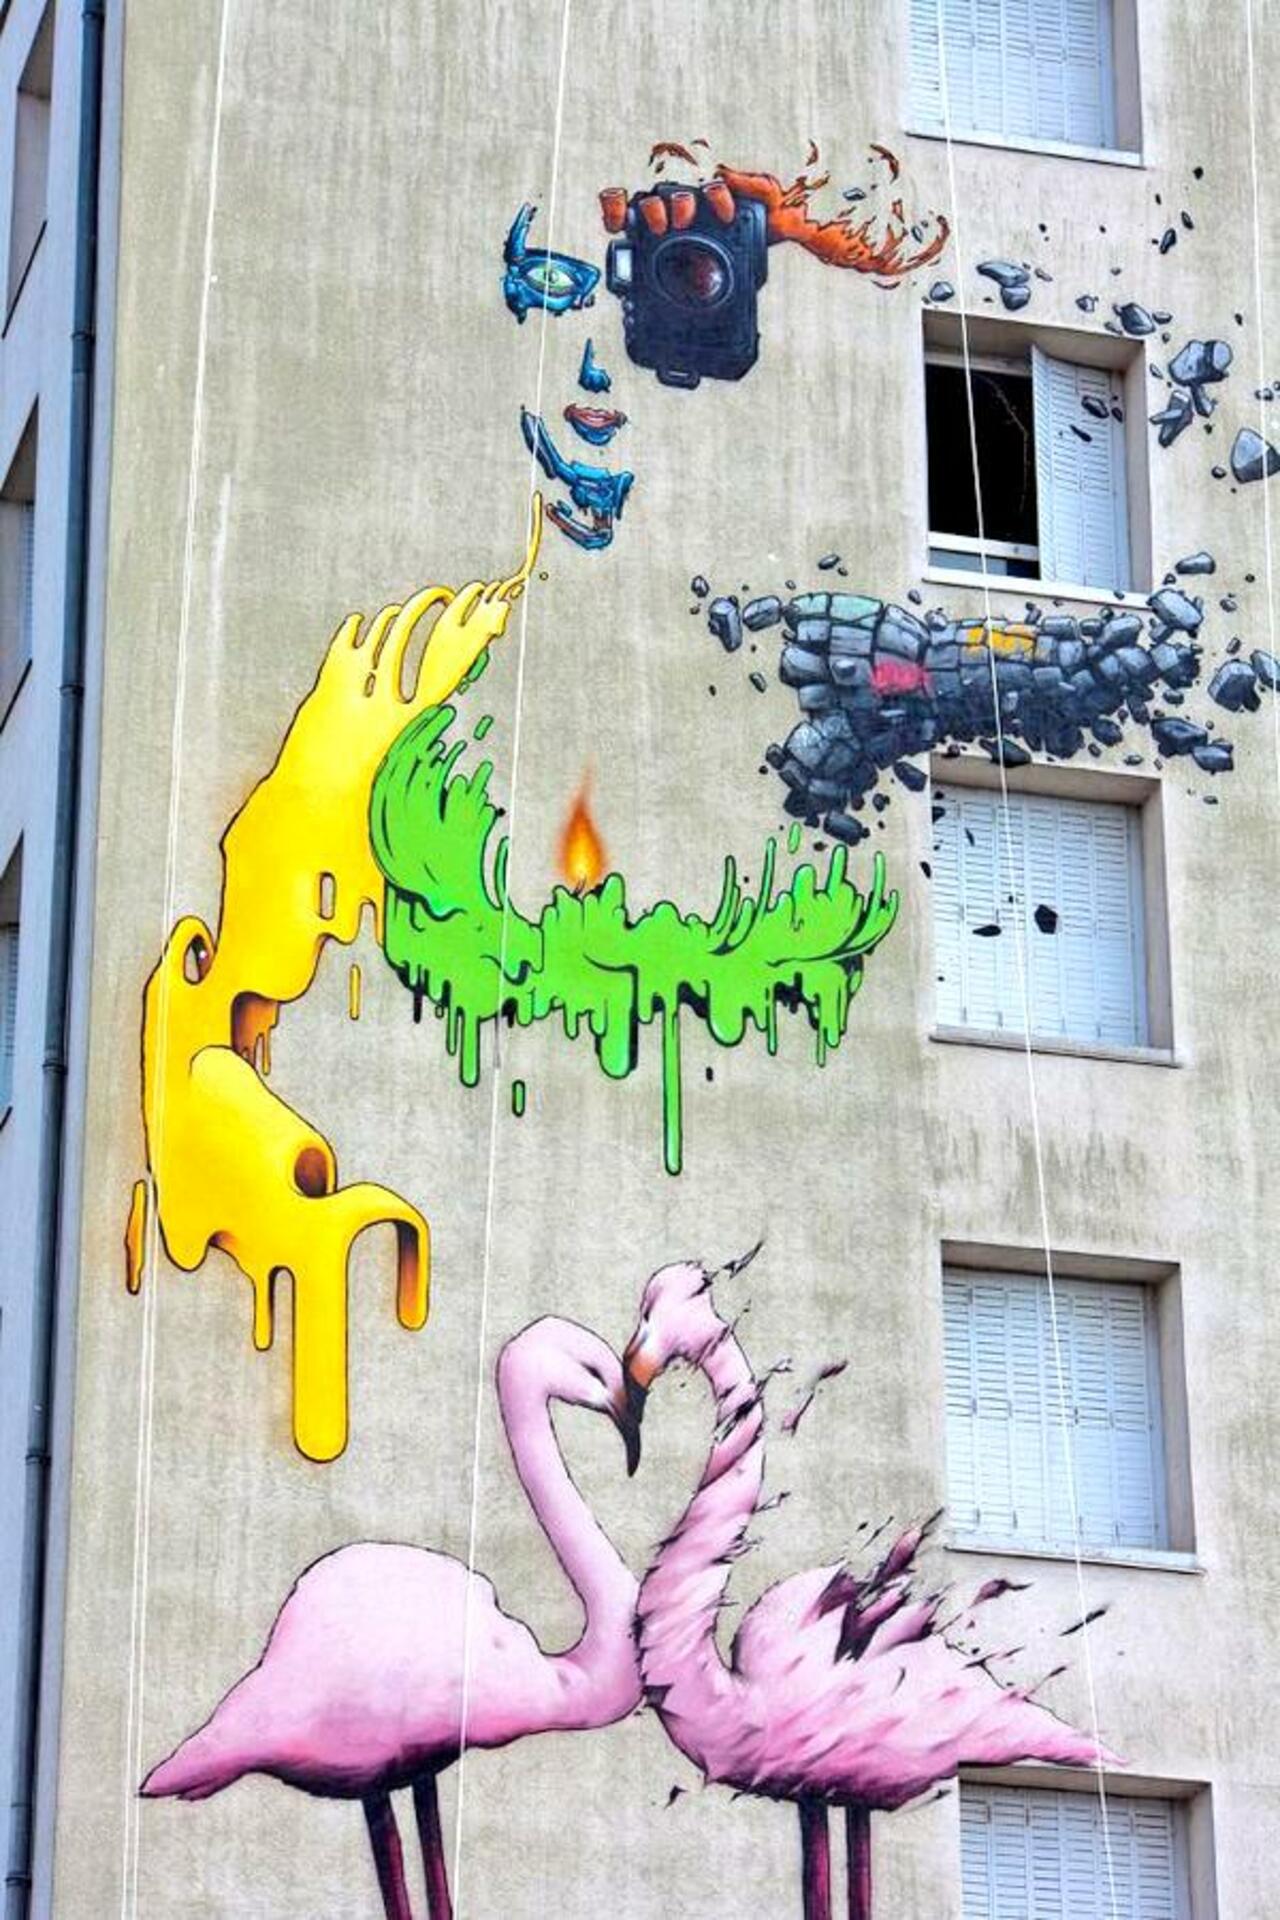 "@Pitchuskita: French artist Brusk 
Meinau, Strasbourg
#streetart #art #graffiti #mural http://t.co/sXGDx0ipqe"